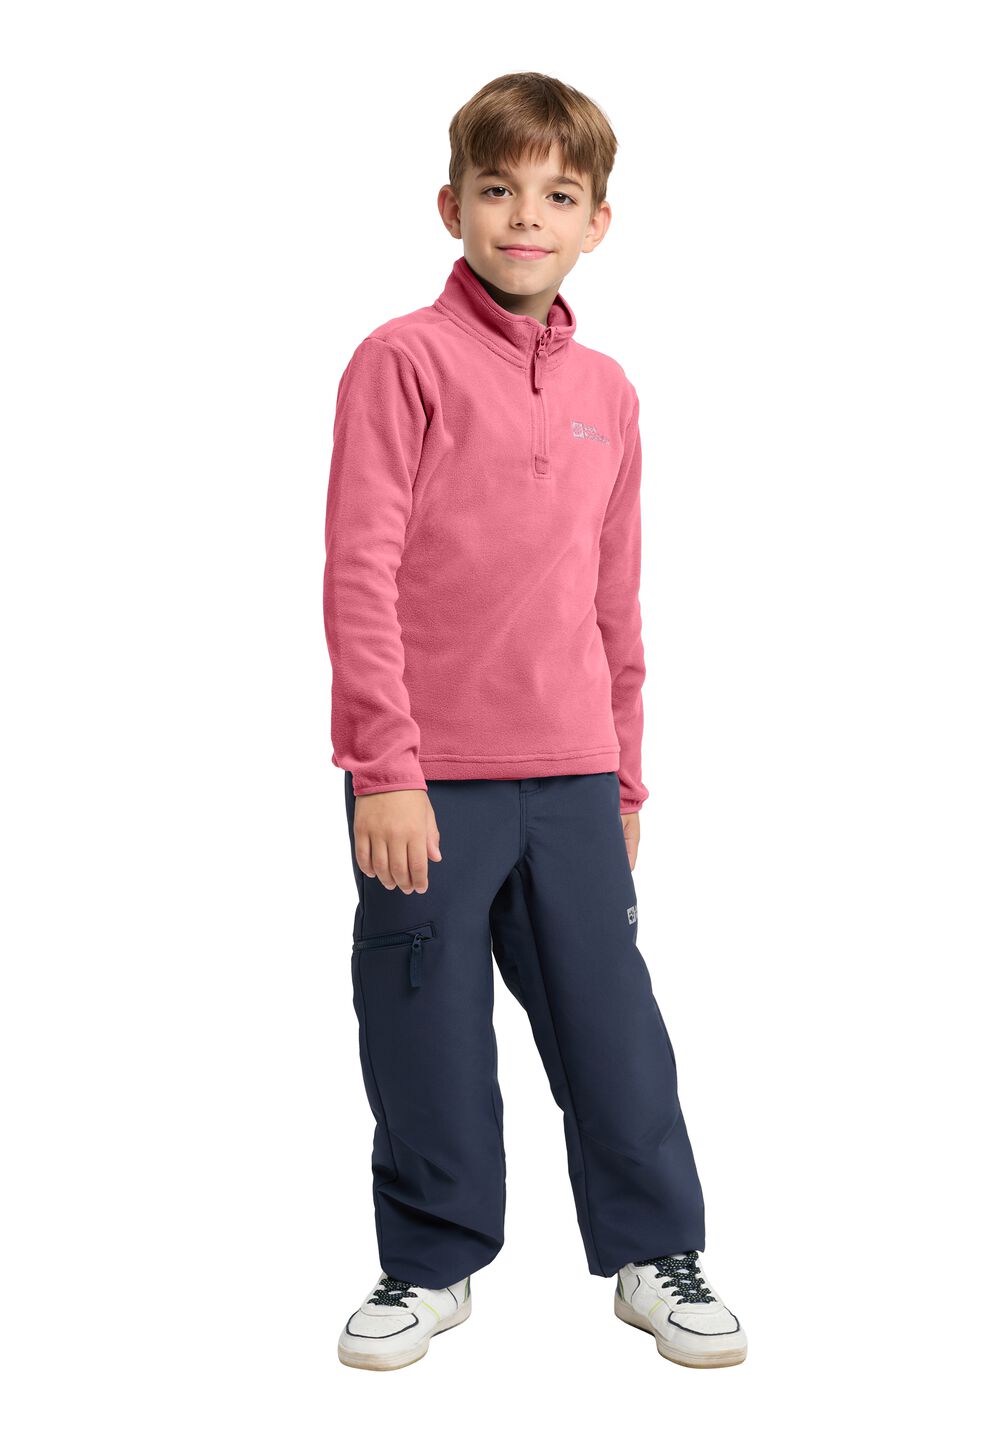 Jack Wolfskin Fleecepullover Kinder Taunus Halfzip Kids 140 soft pink soft pink von Jack Wolfskin